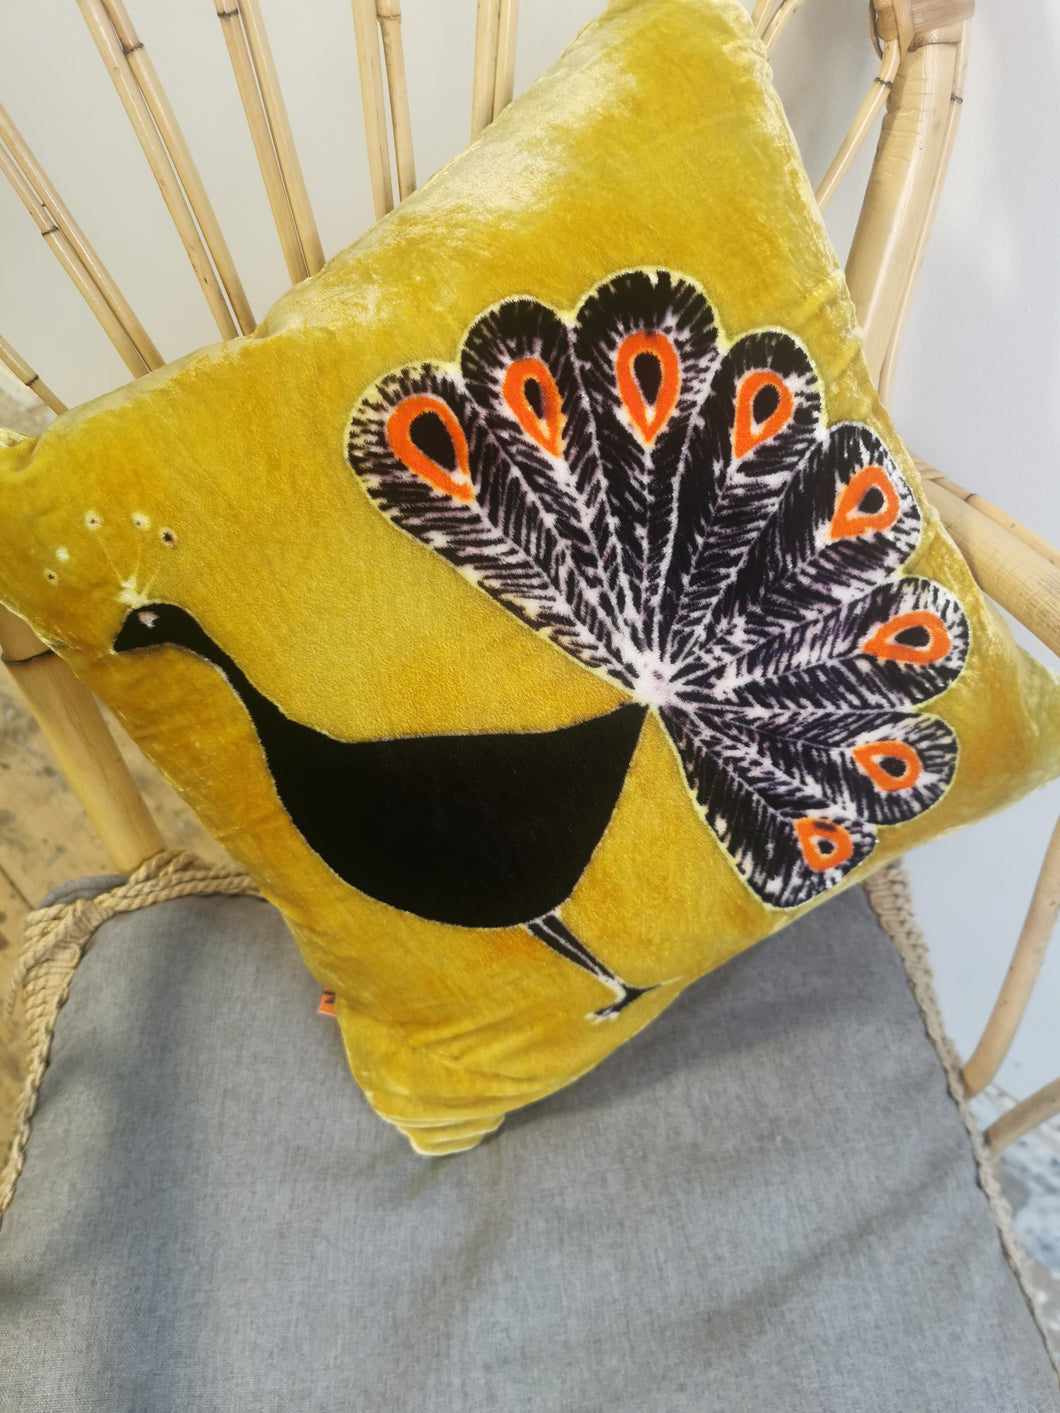 Hand-painted velvet cushions, PEACOCK multi coloured on mustard background.